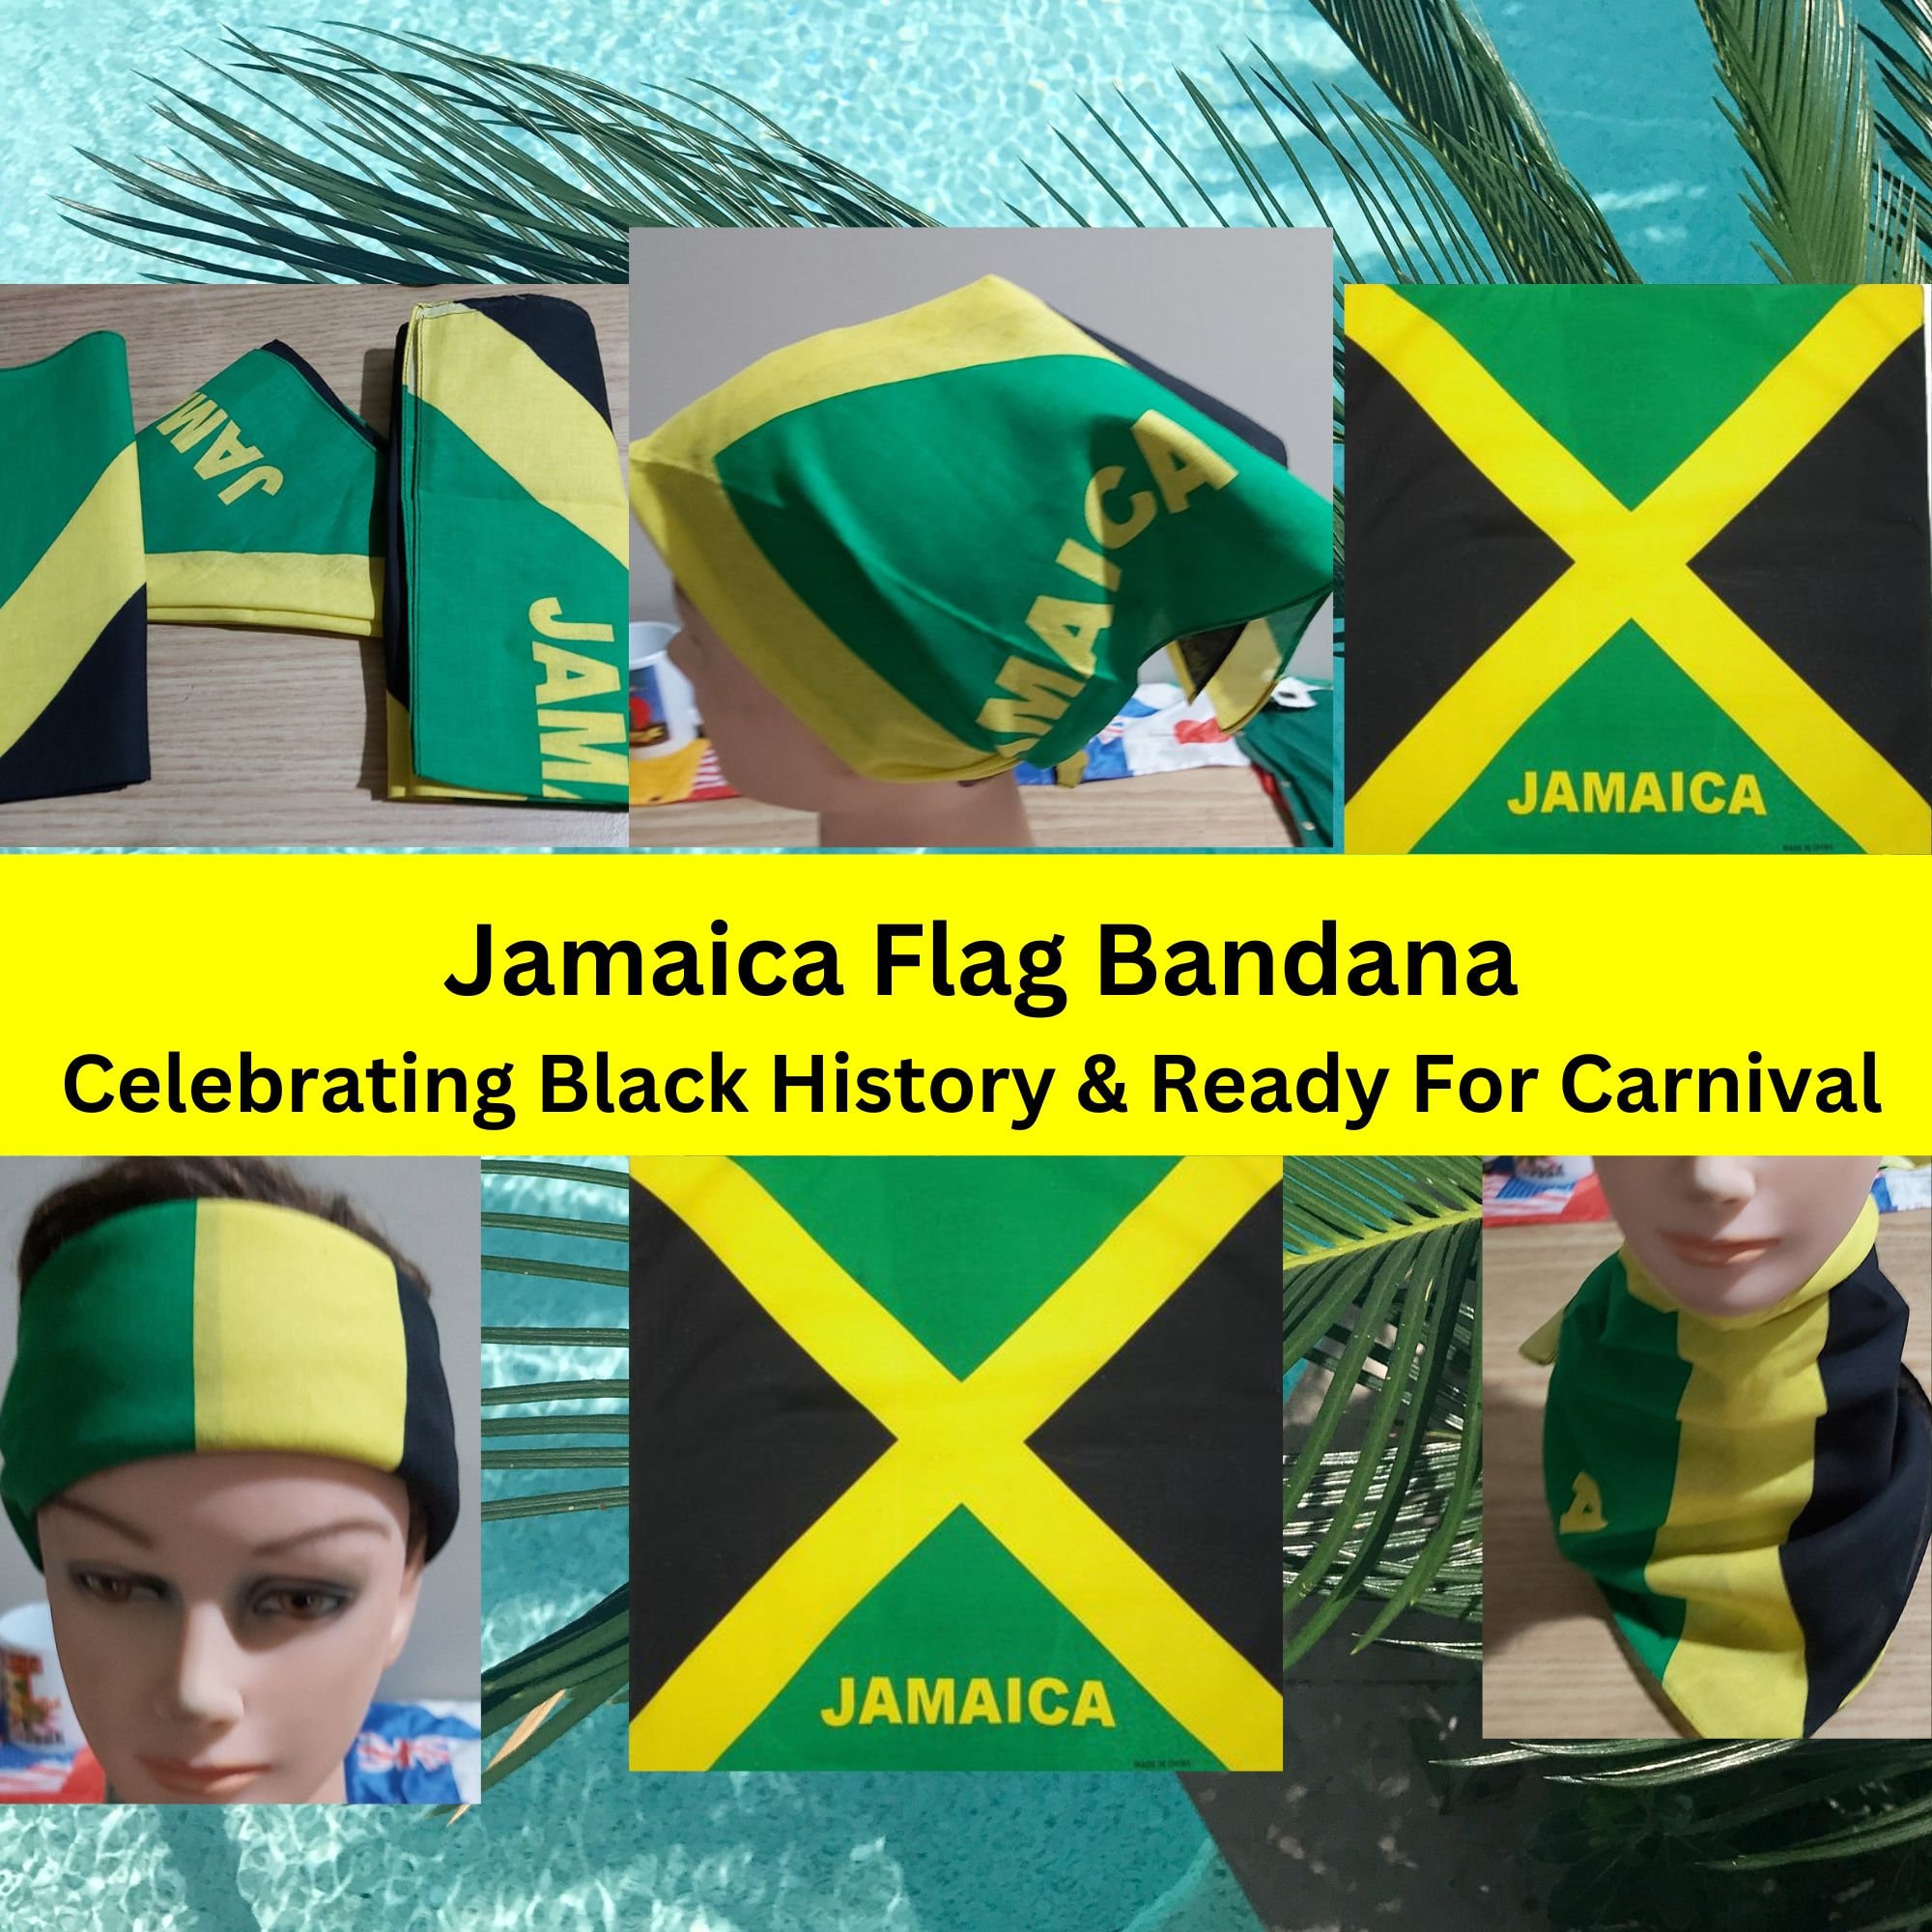 Jamaican Bandana print- The fabric of life! Source: @thebellablair”